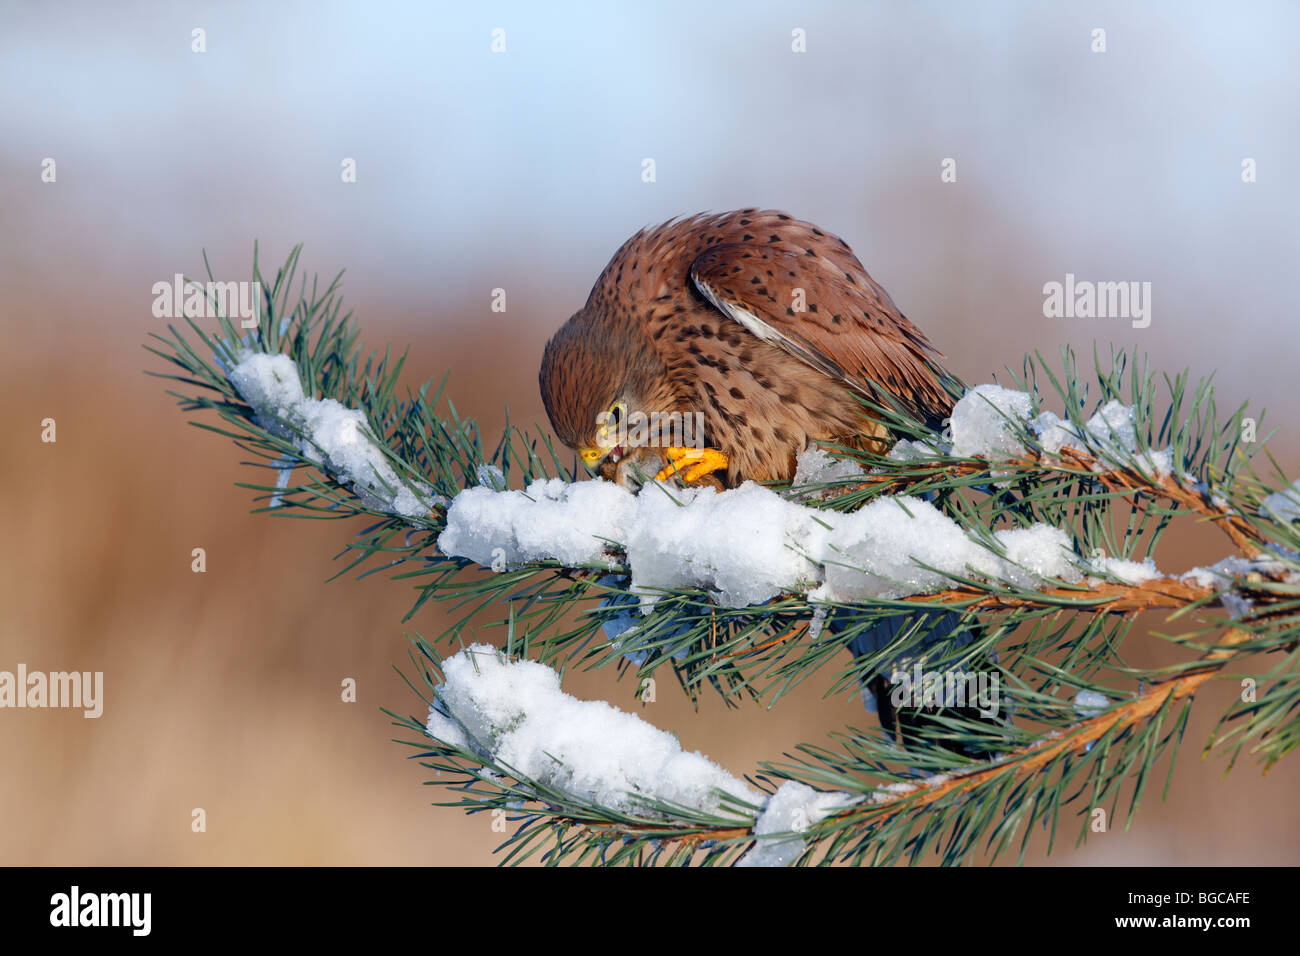 Cernícalo vulgar Falco tinnunculus encaramado nieve matar pino Foto de stock